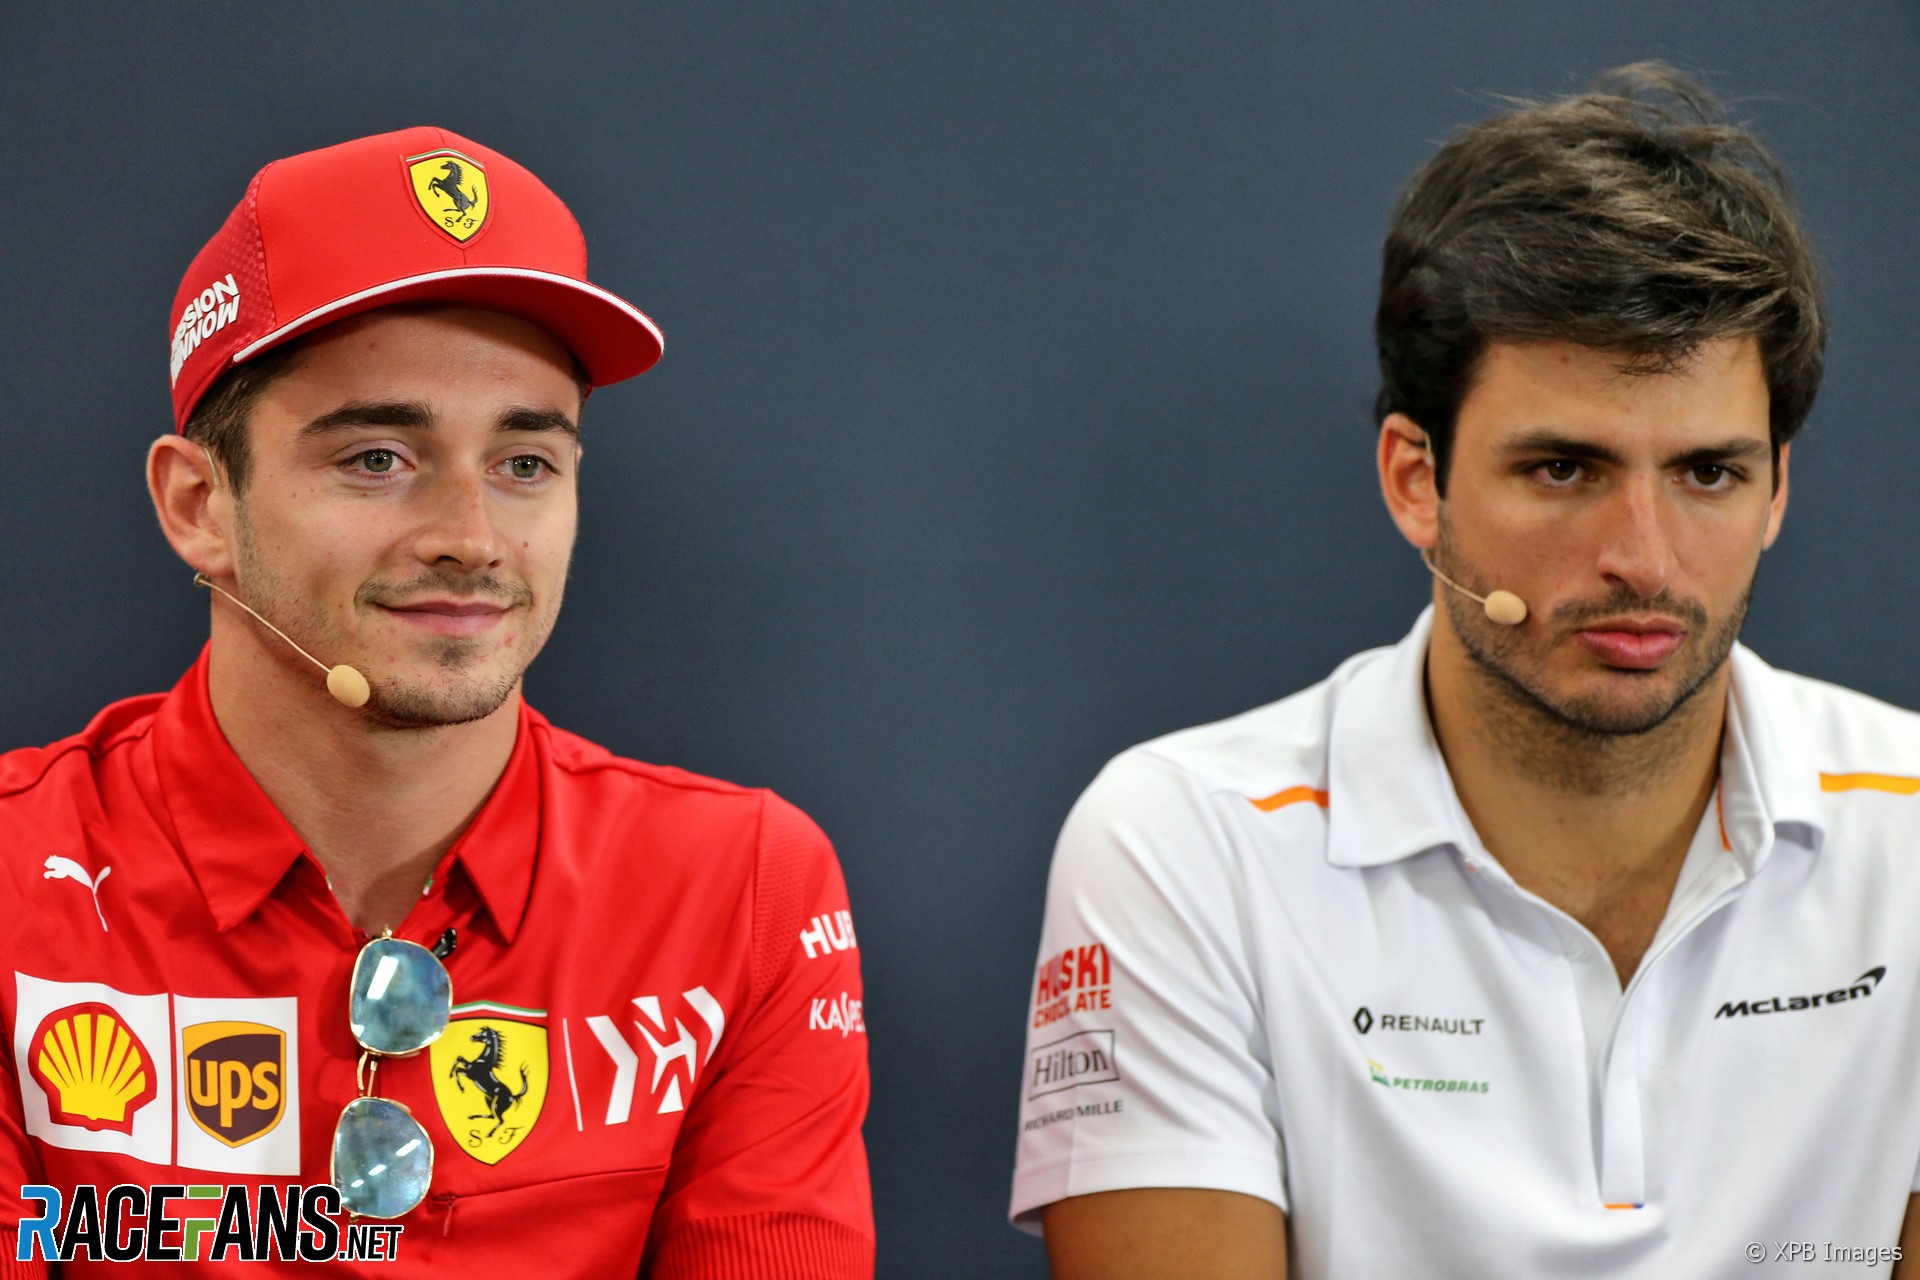 Inspiredlovers FD “Forza Ferrari, F*ck”: Ferrari F1 Driver Rejects Barca Fan’s Request With... Boxing Sports  Formula 1 Ferrari F1 F1 News Charles Leclerc Carlos Sainz 